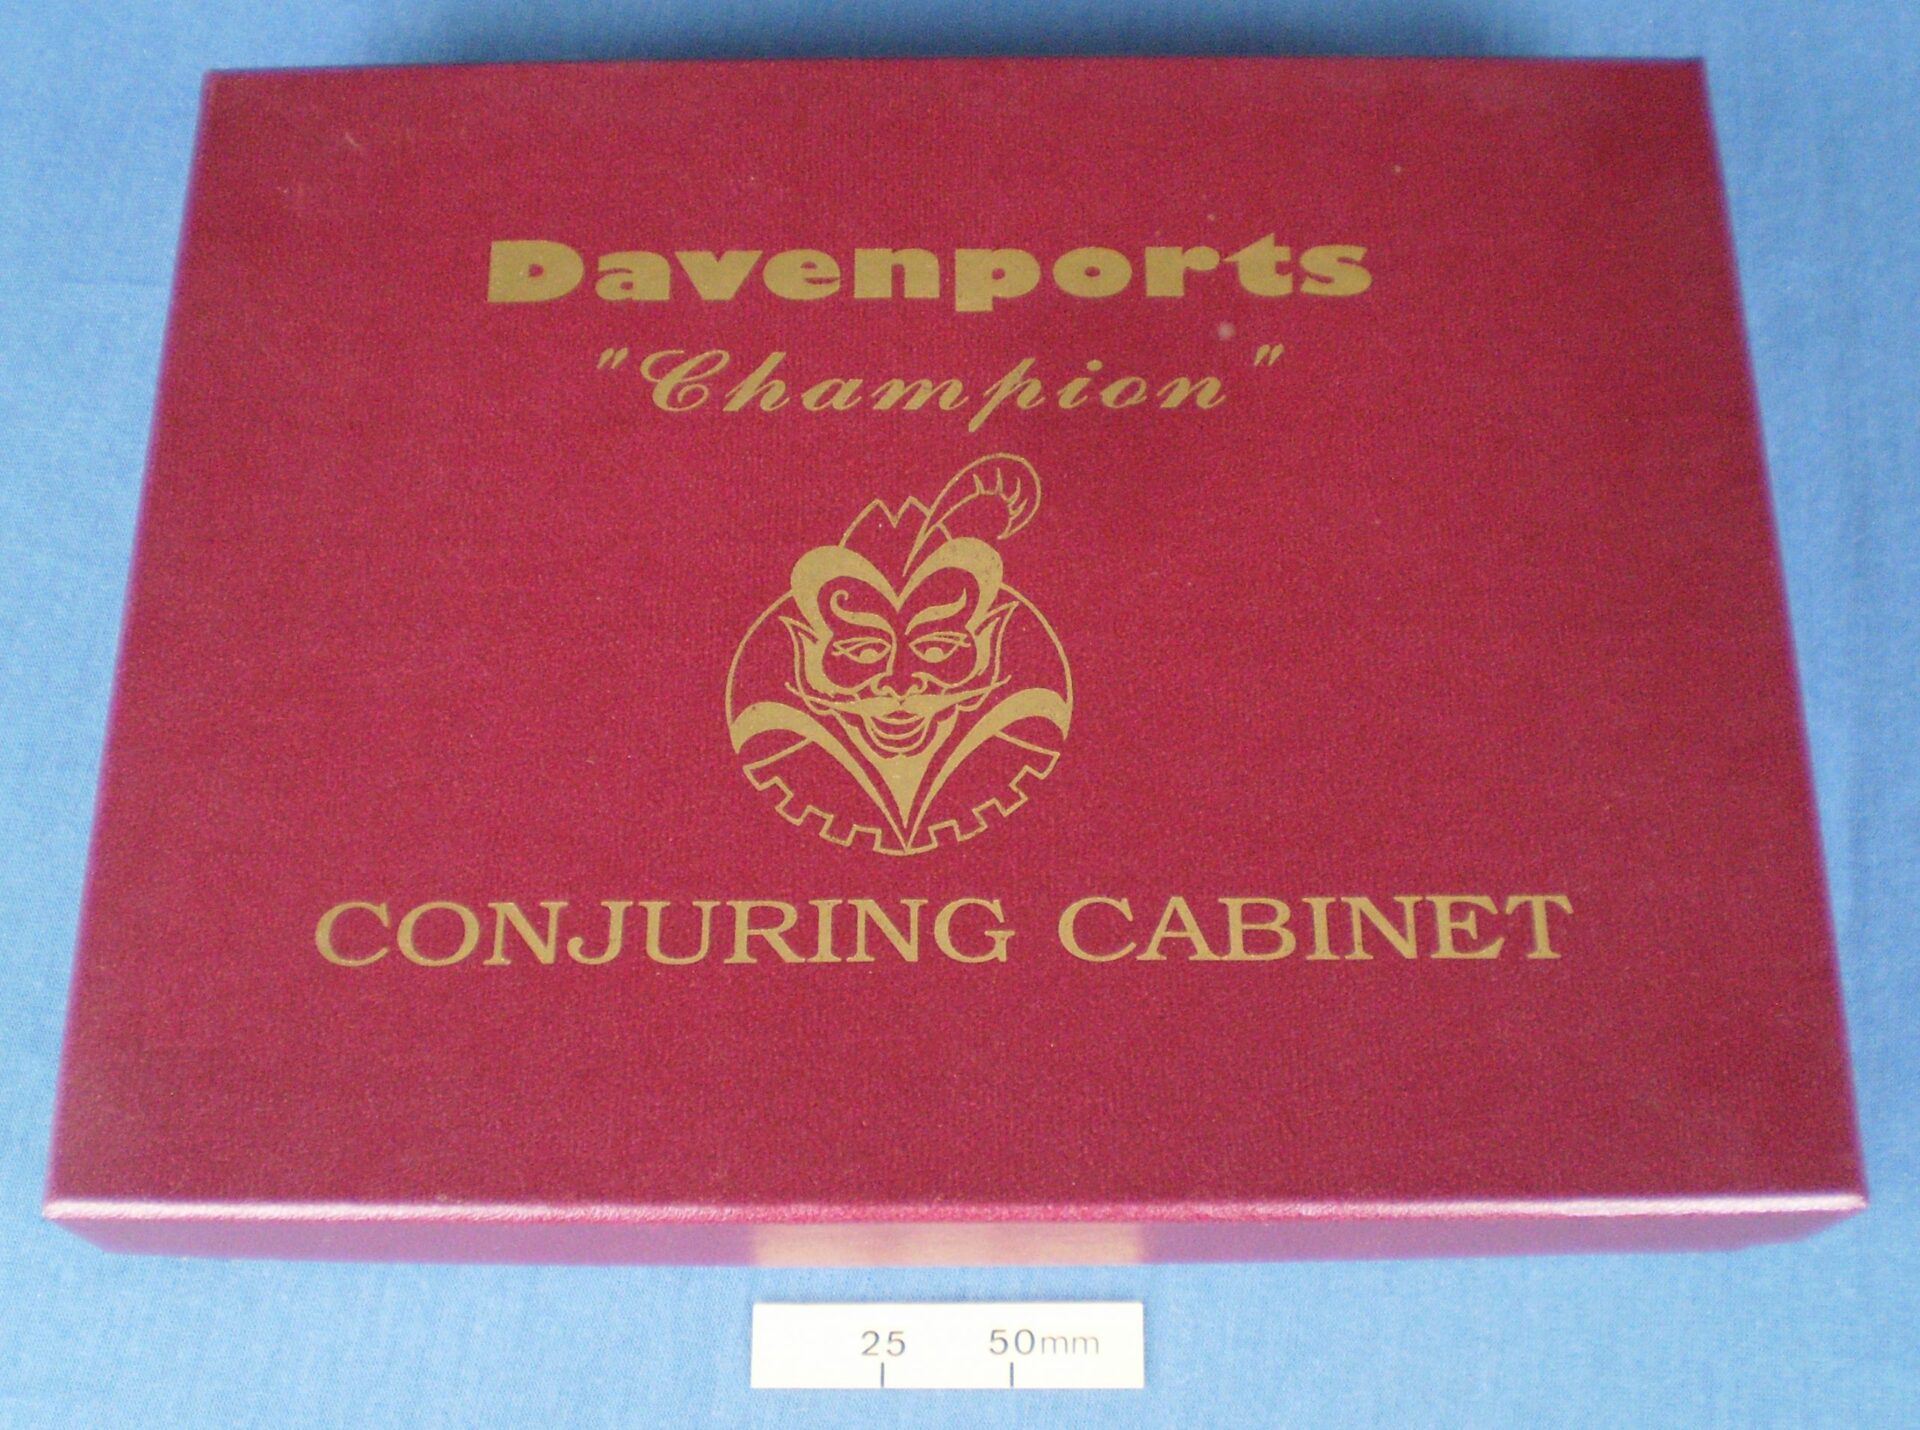 Davenports ‘Champion’ Conjuring Cabinet